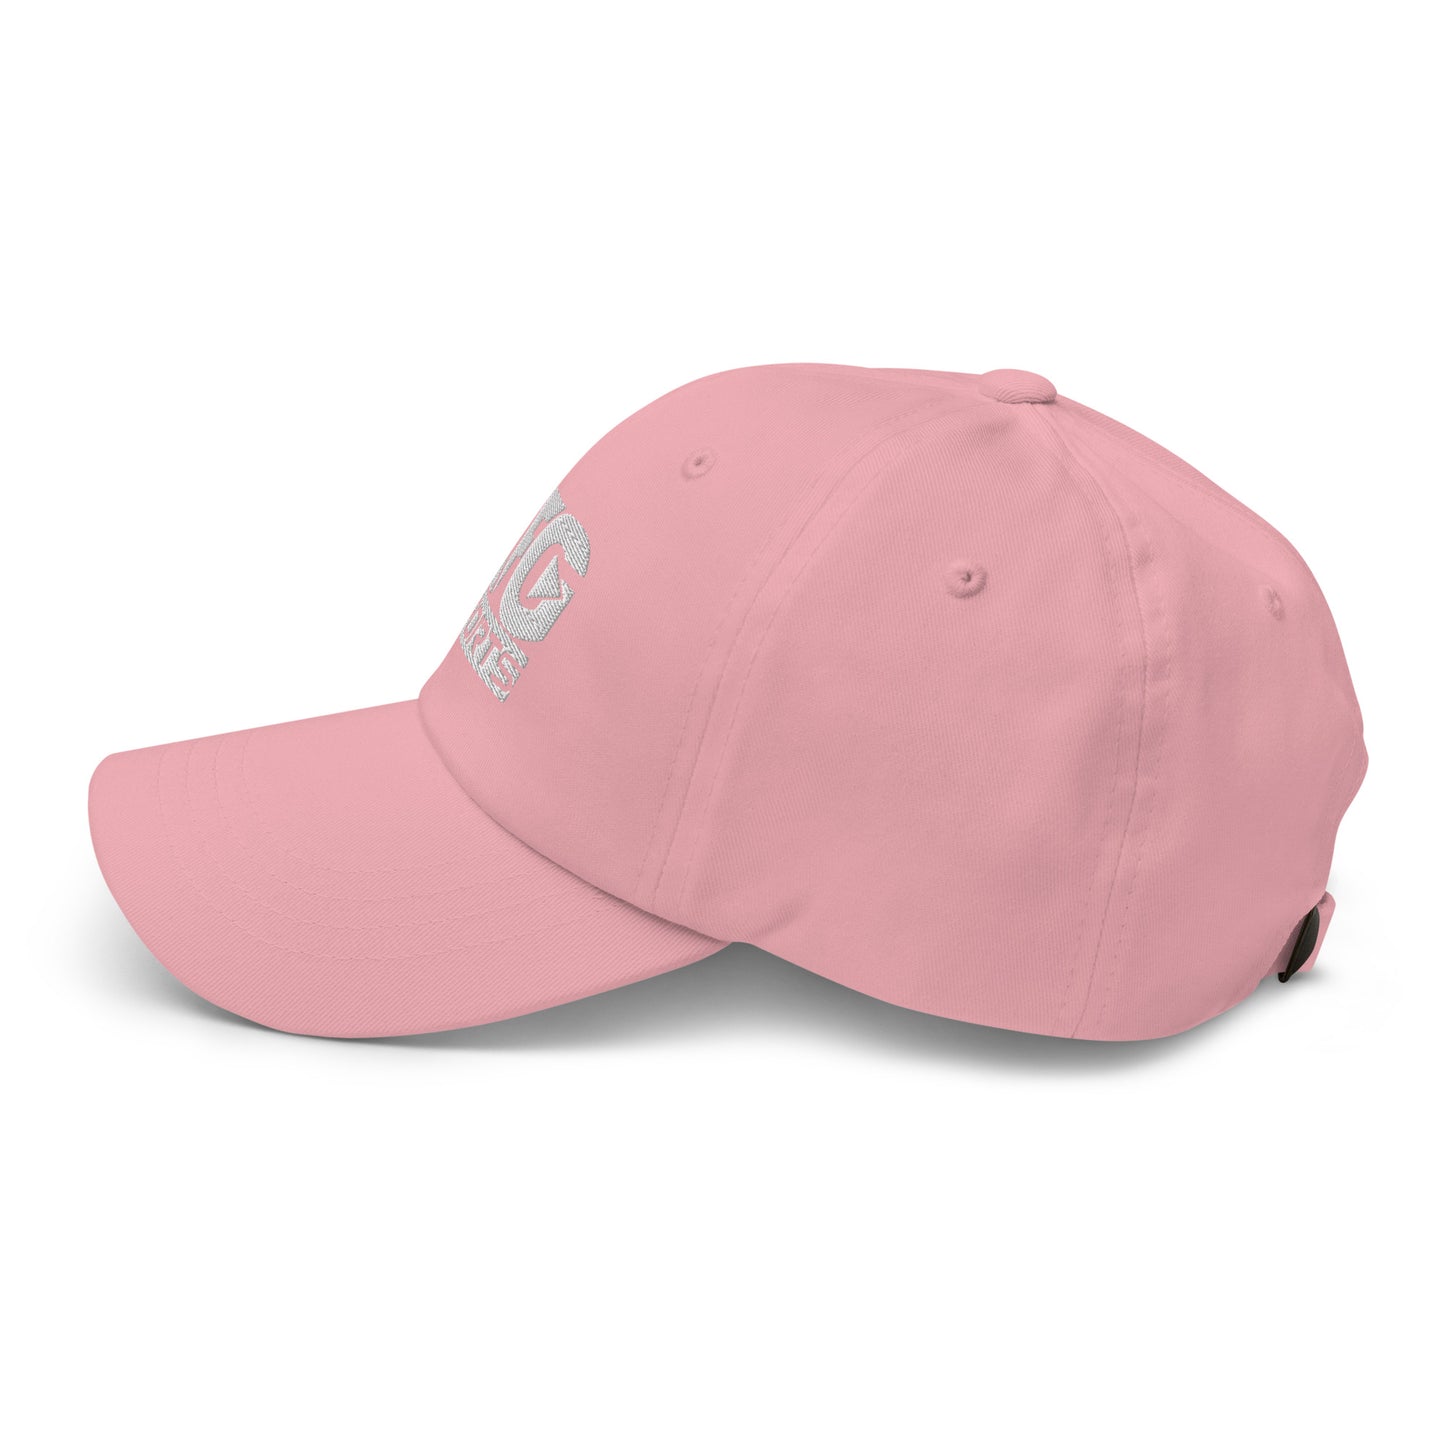 LFG Sports pink hat